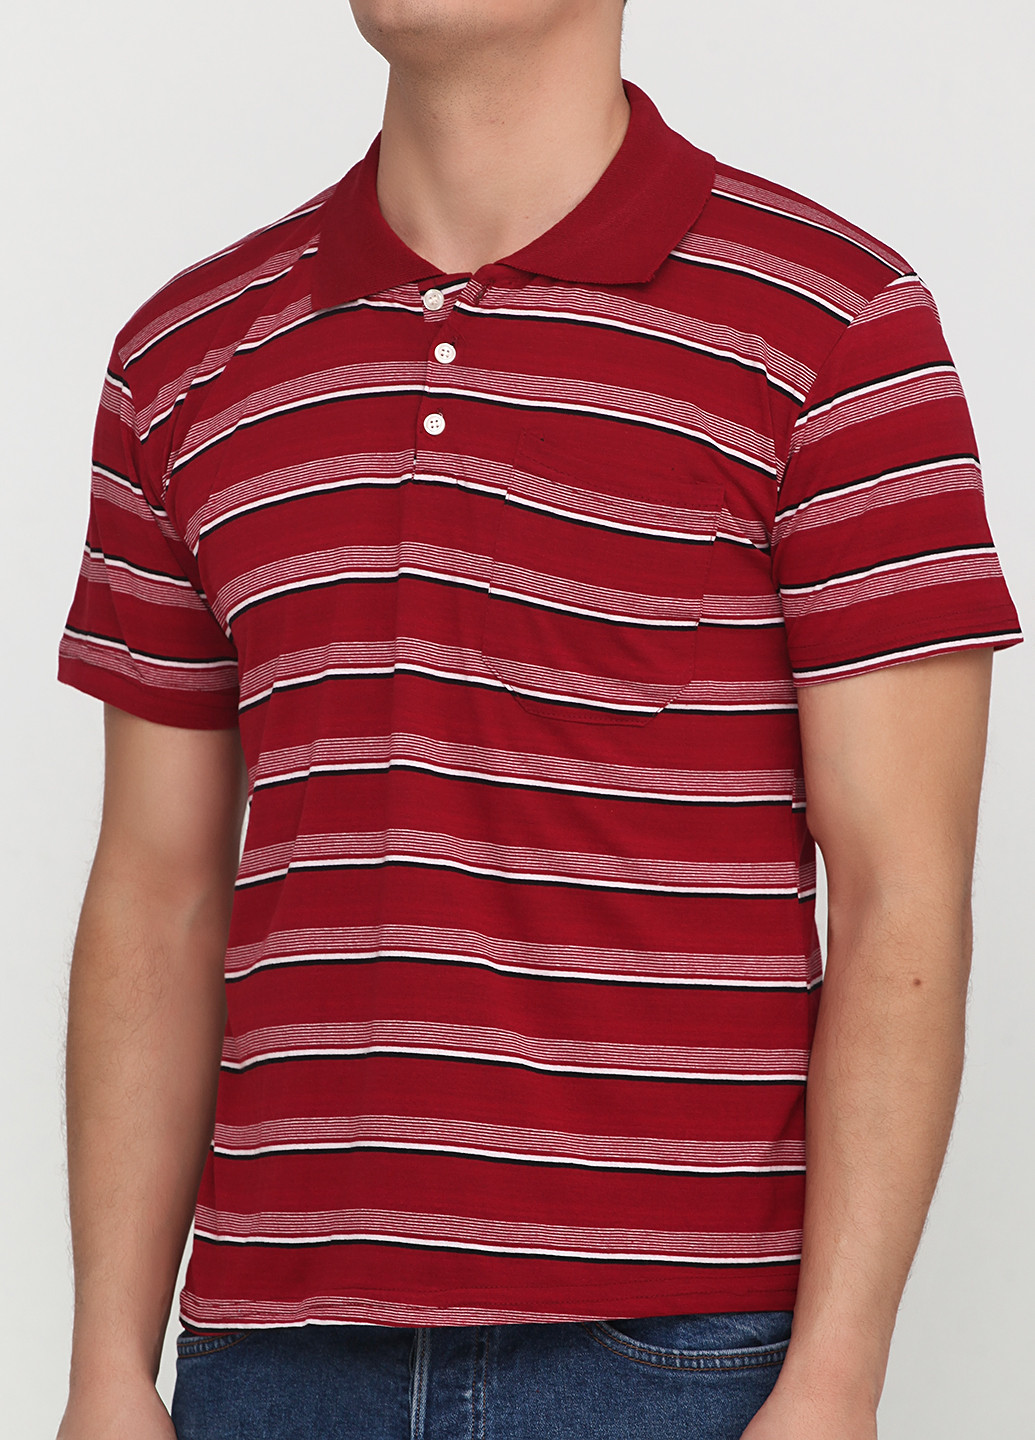 Светло-бордовая футболка-поло для мужчин Chiarotex в полоску